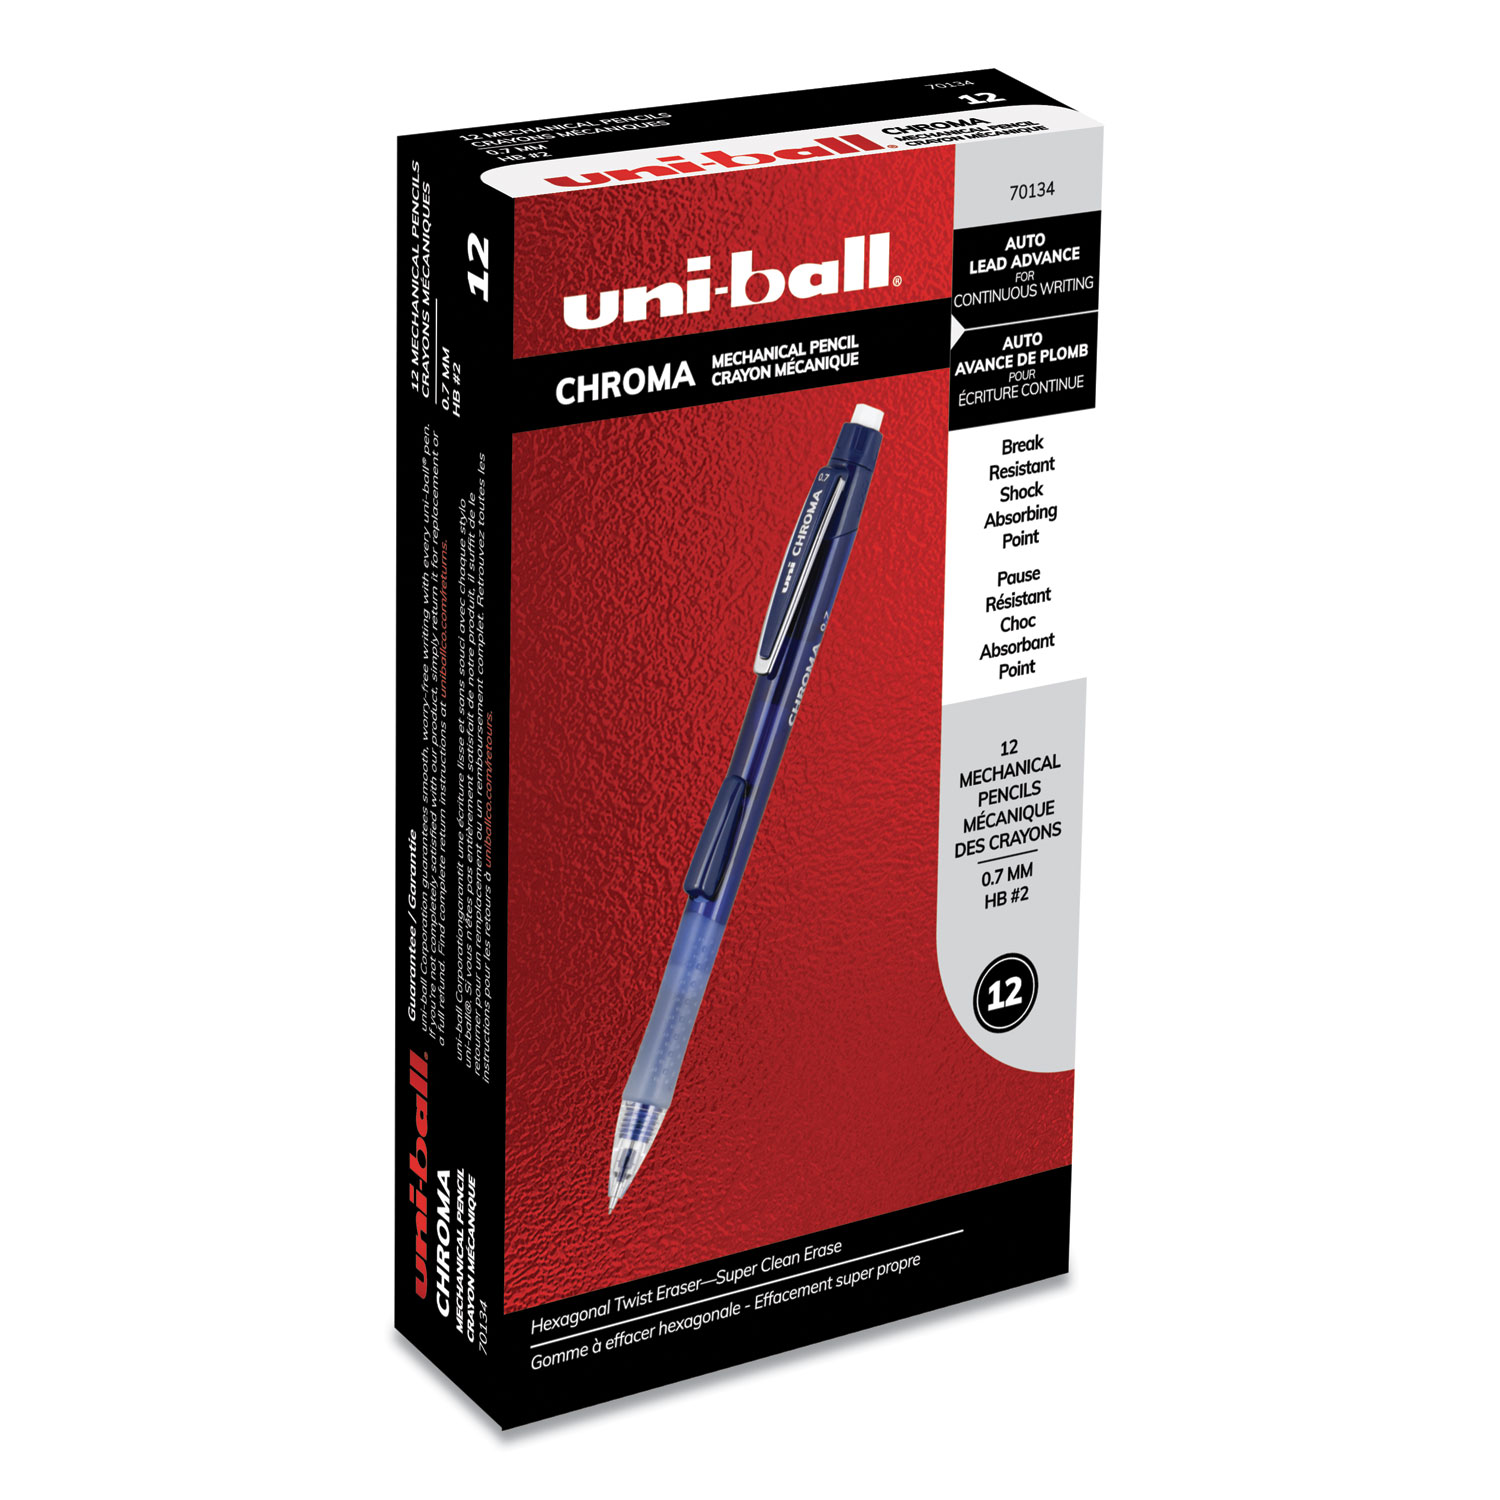 uni-ball® Chroma Mechanical Pencil, 0.7 mm, HB (#2), Black Lead, Cobalt Barrel, Dozen